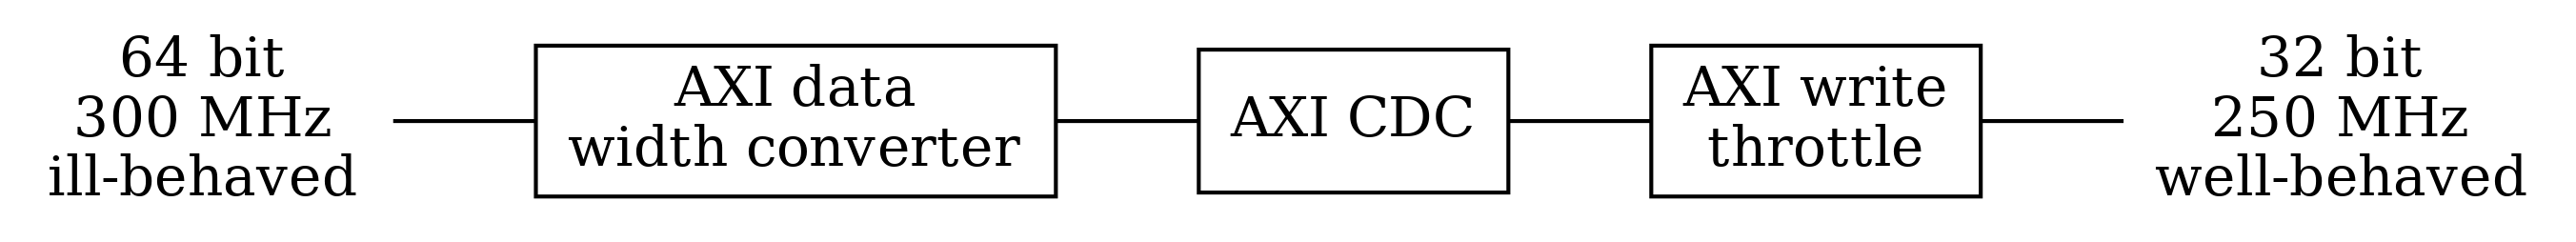 digraph my_graph {
graph [ dpi = 300 splines=ortho];
rankdir="LR";

left_port [ shape=none label="64 bit\n300 MHz\nill-behaved" ];
axi_data_width_converter [ shape=box label="AXI data\nwidth converter"];
axi_cdc [ shape=box label="AXI CDC"];
axi_write_throttle [ shape=box label="AXI write\nthrottle"];
right_port [ shape=none label="32 bit\n250 MHz\nwell-behaved" ];

left_port -> axi_data_width_converter [ dir="none" ];
axi_data_width_converter -> axi_cdc [ dir="none" ];
axi_cdc -> axi_write_throttle [ dir="none" ];
axi_write_throttle -> right_port [ dir="none" ];
}